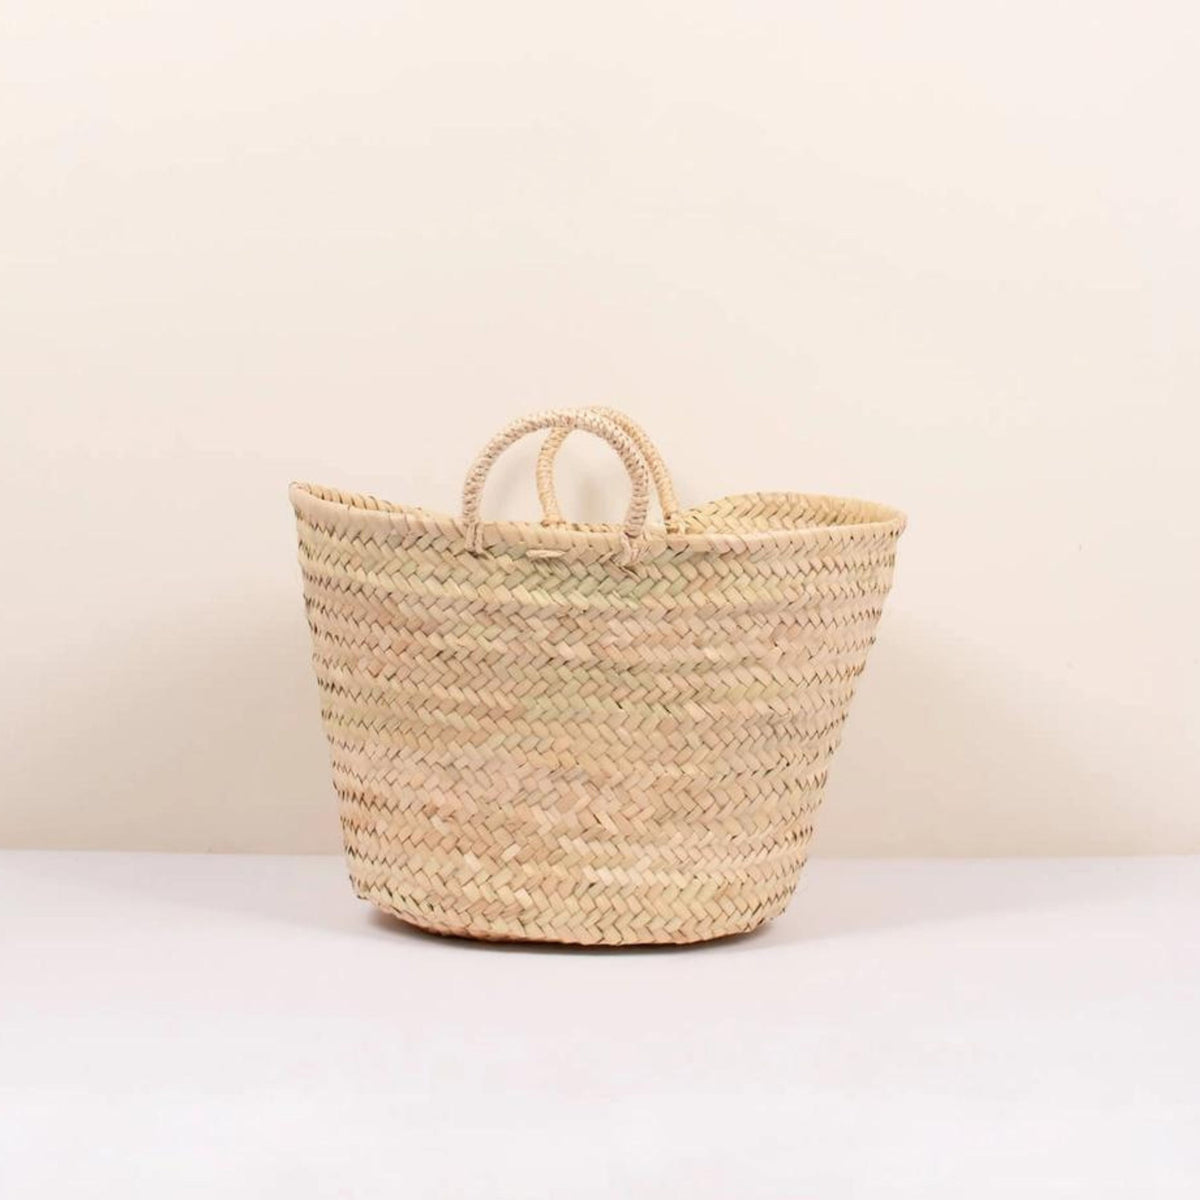 Small Market Basket